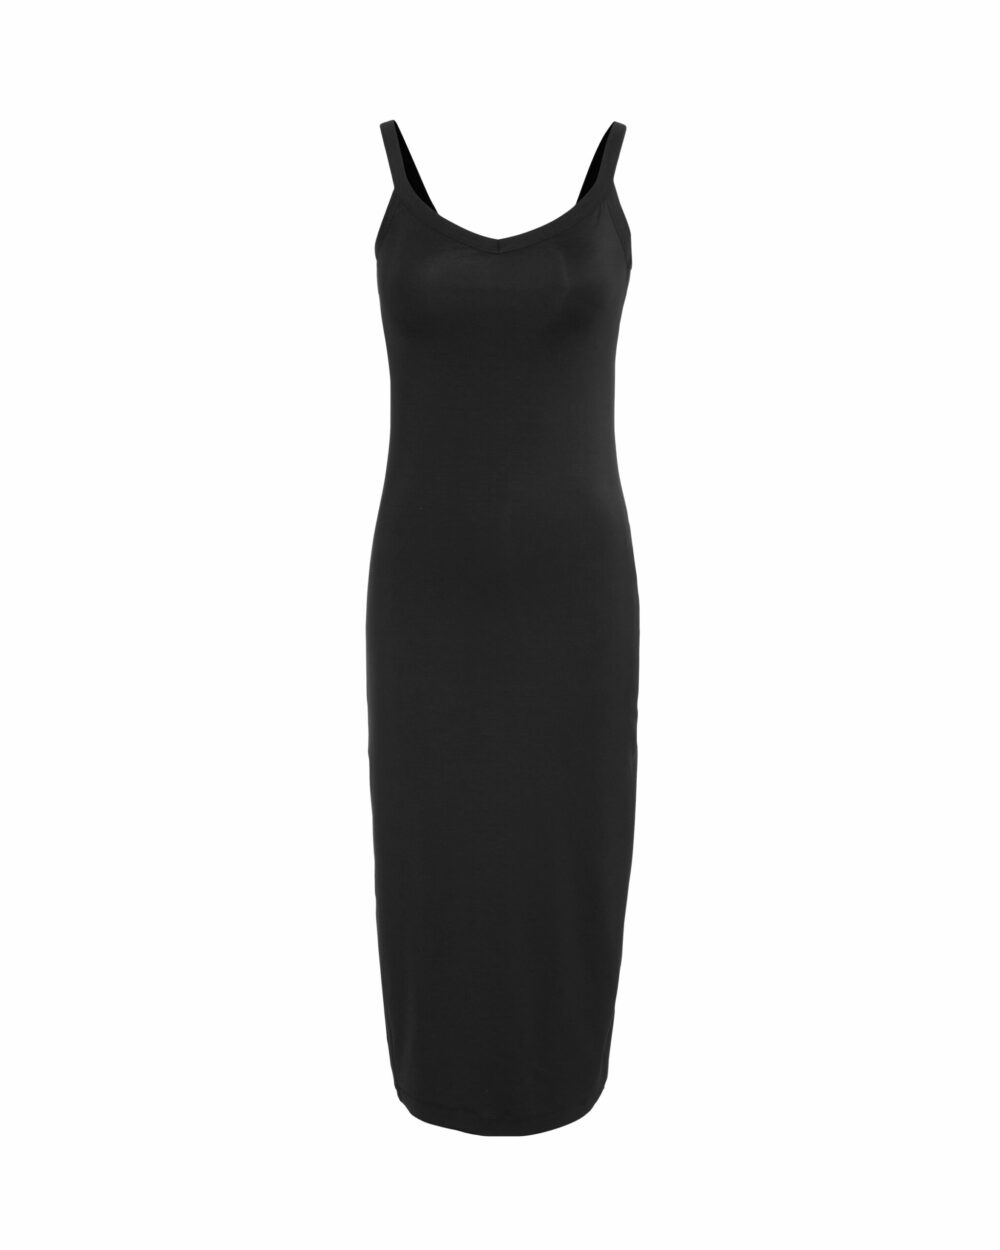 Goddess Ribbed Spaghetti Strap Dress - Black - Black / XS